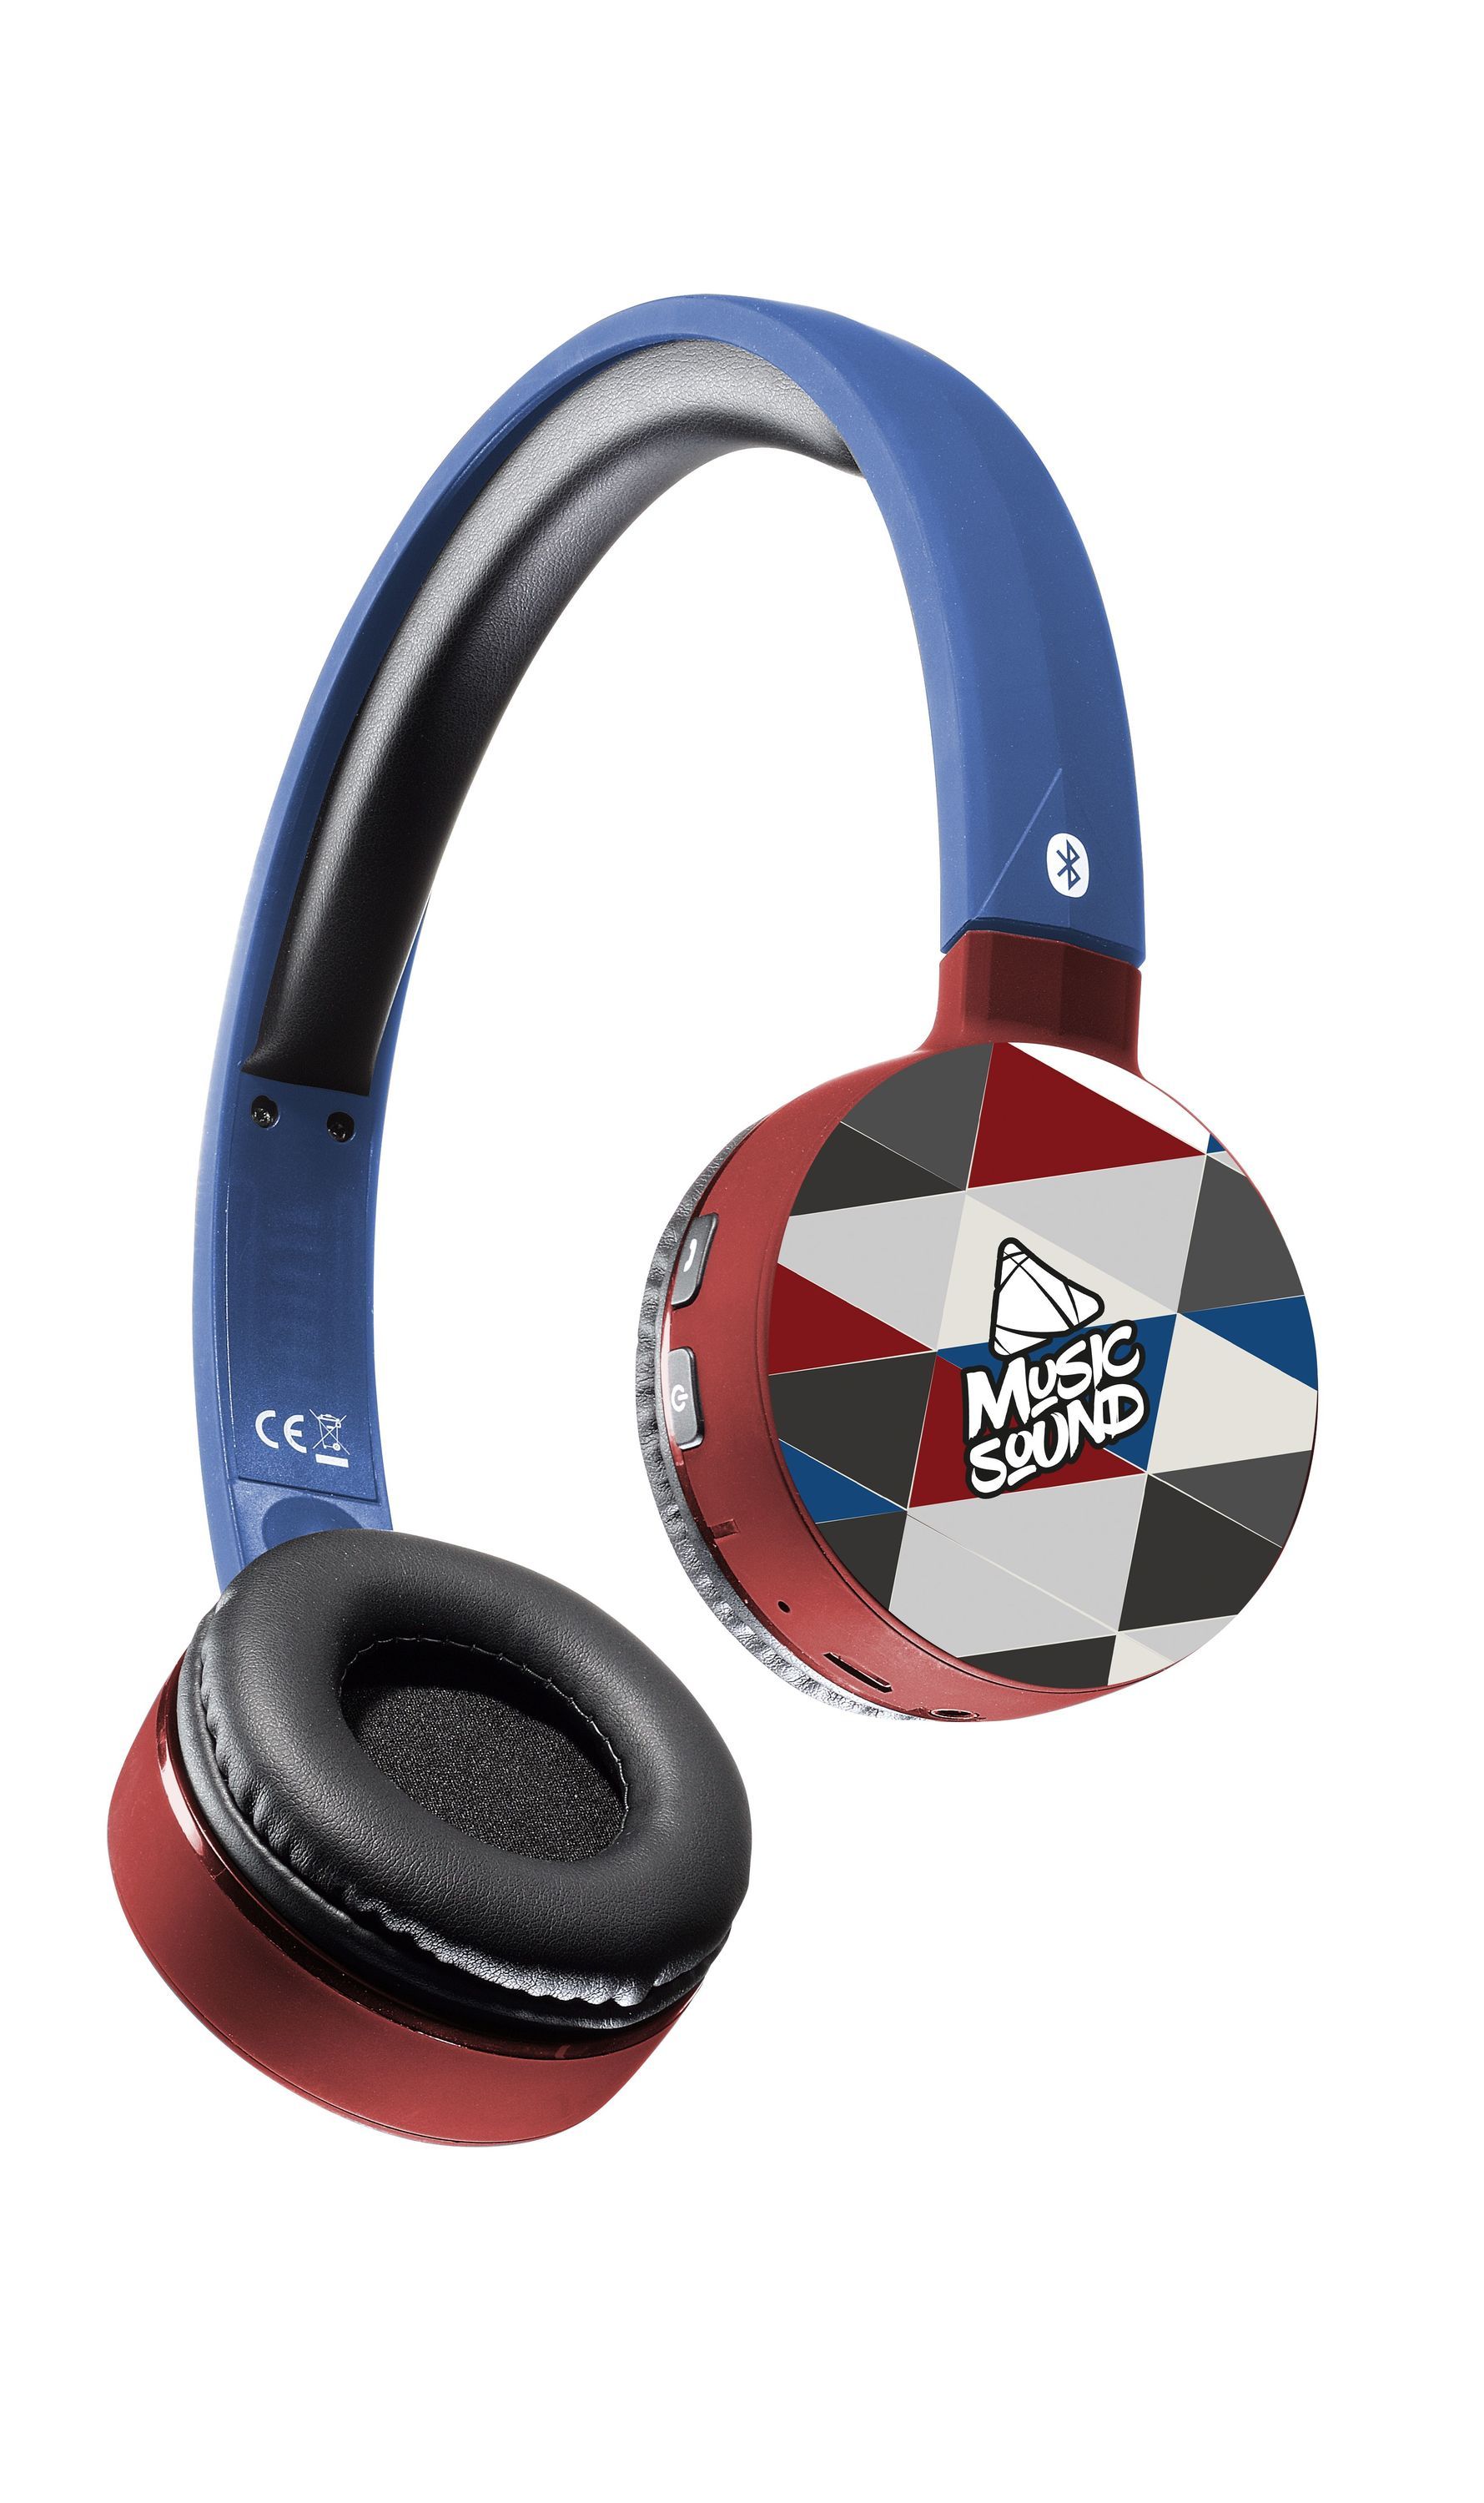 Bluetooth sluchátka MUSIC SOUND s hlavovým mostem a mikrofonem, vzor 6 (2020)